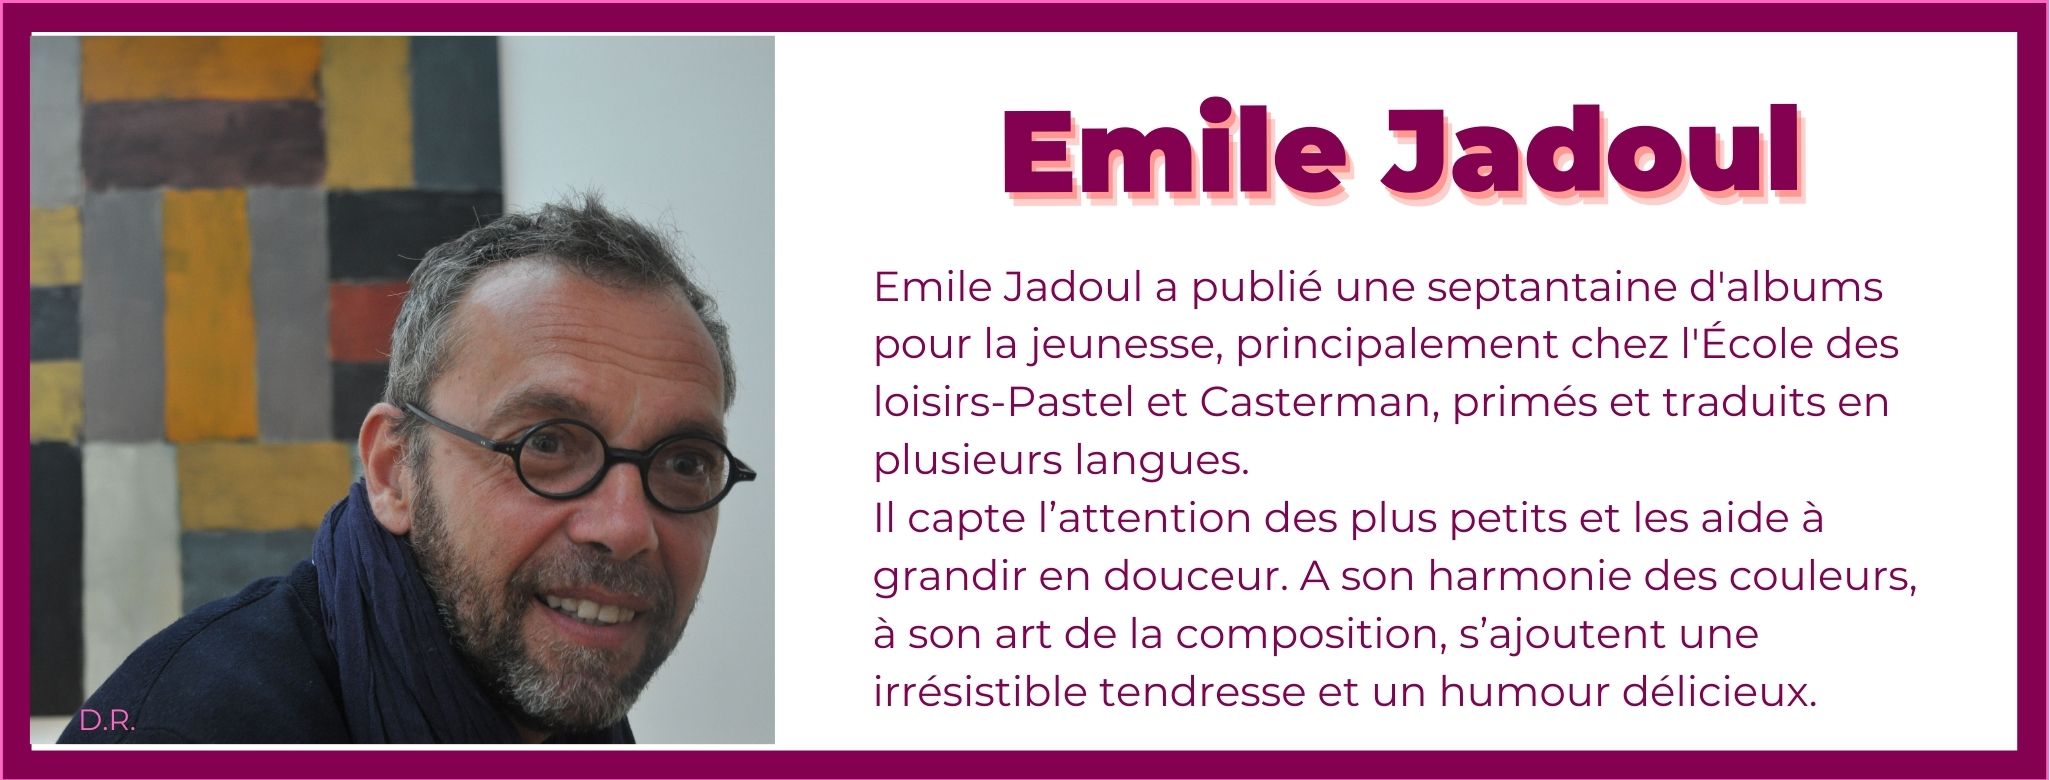 4. Emile Jadoul